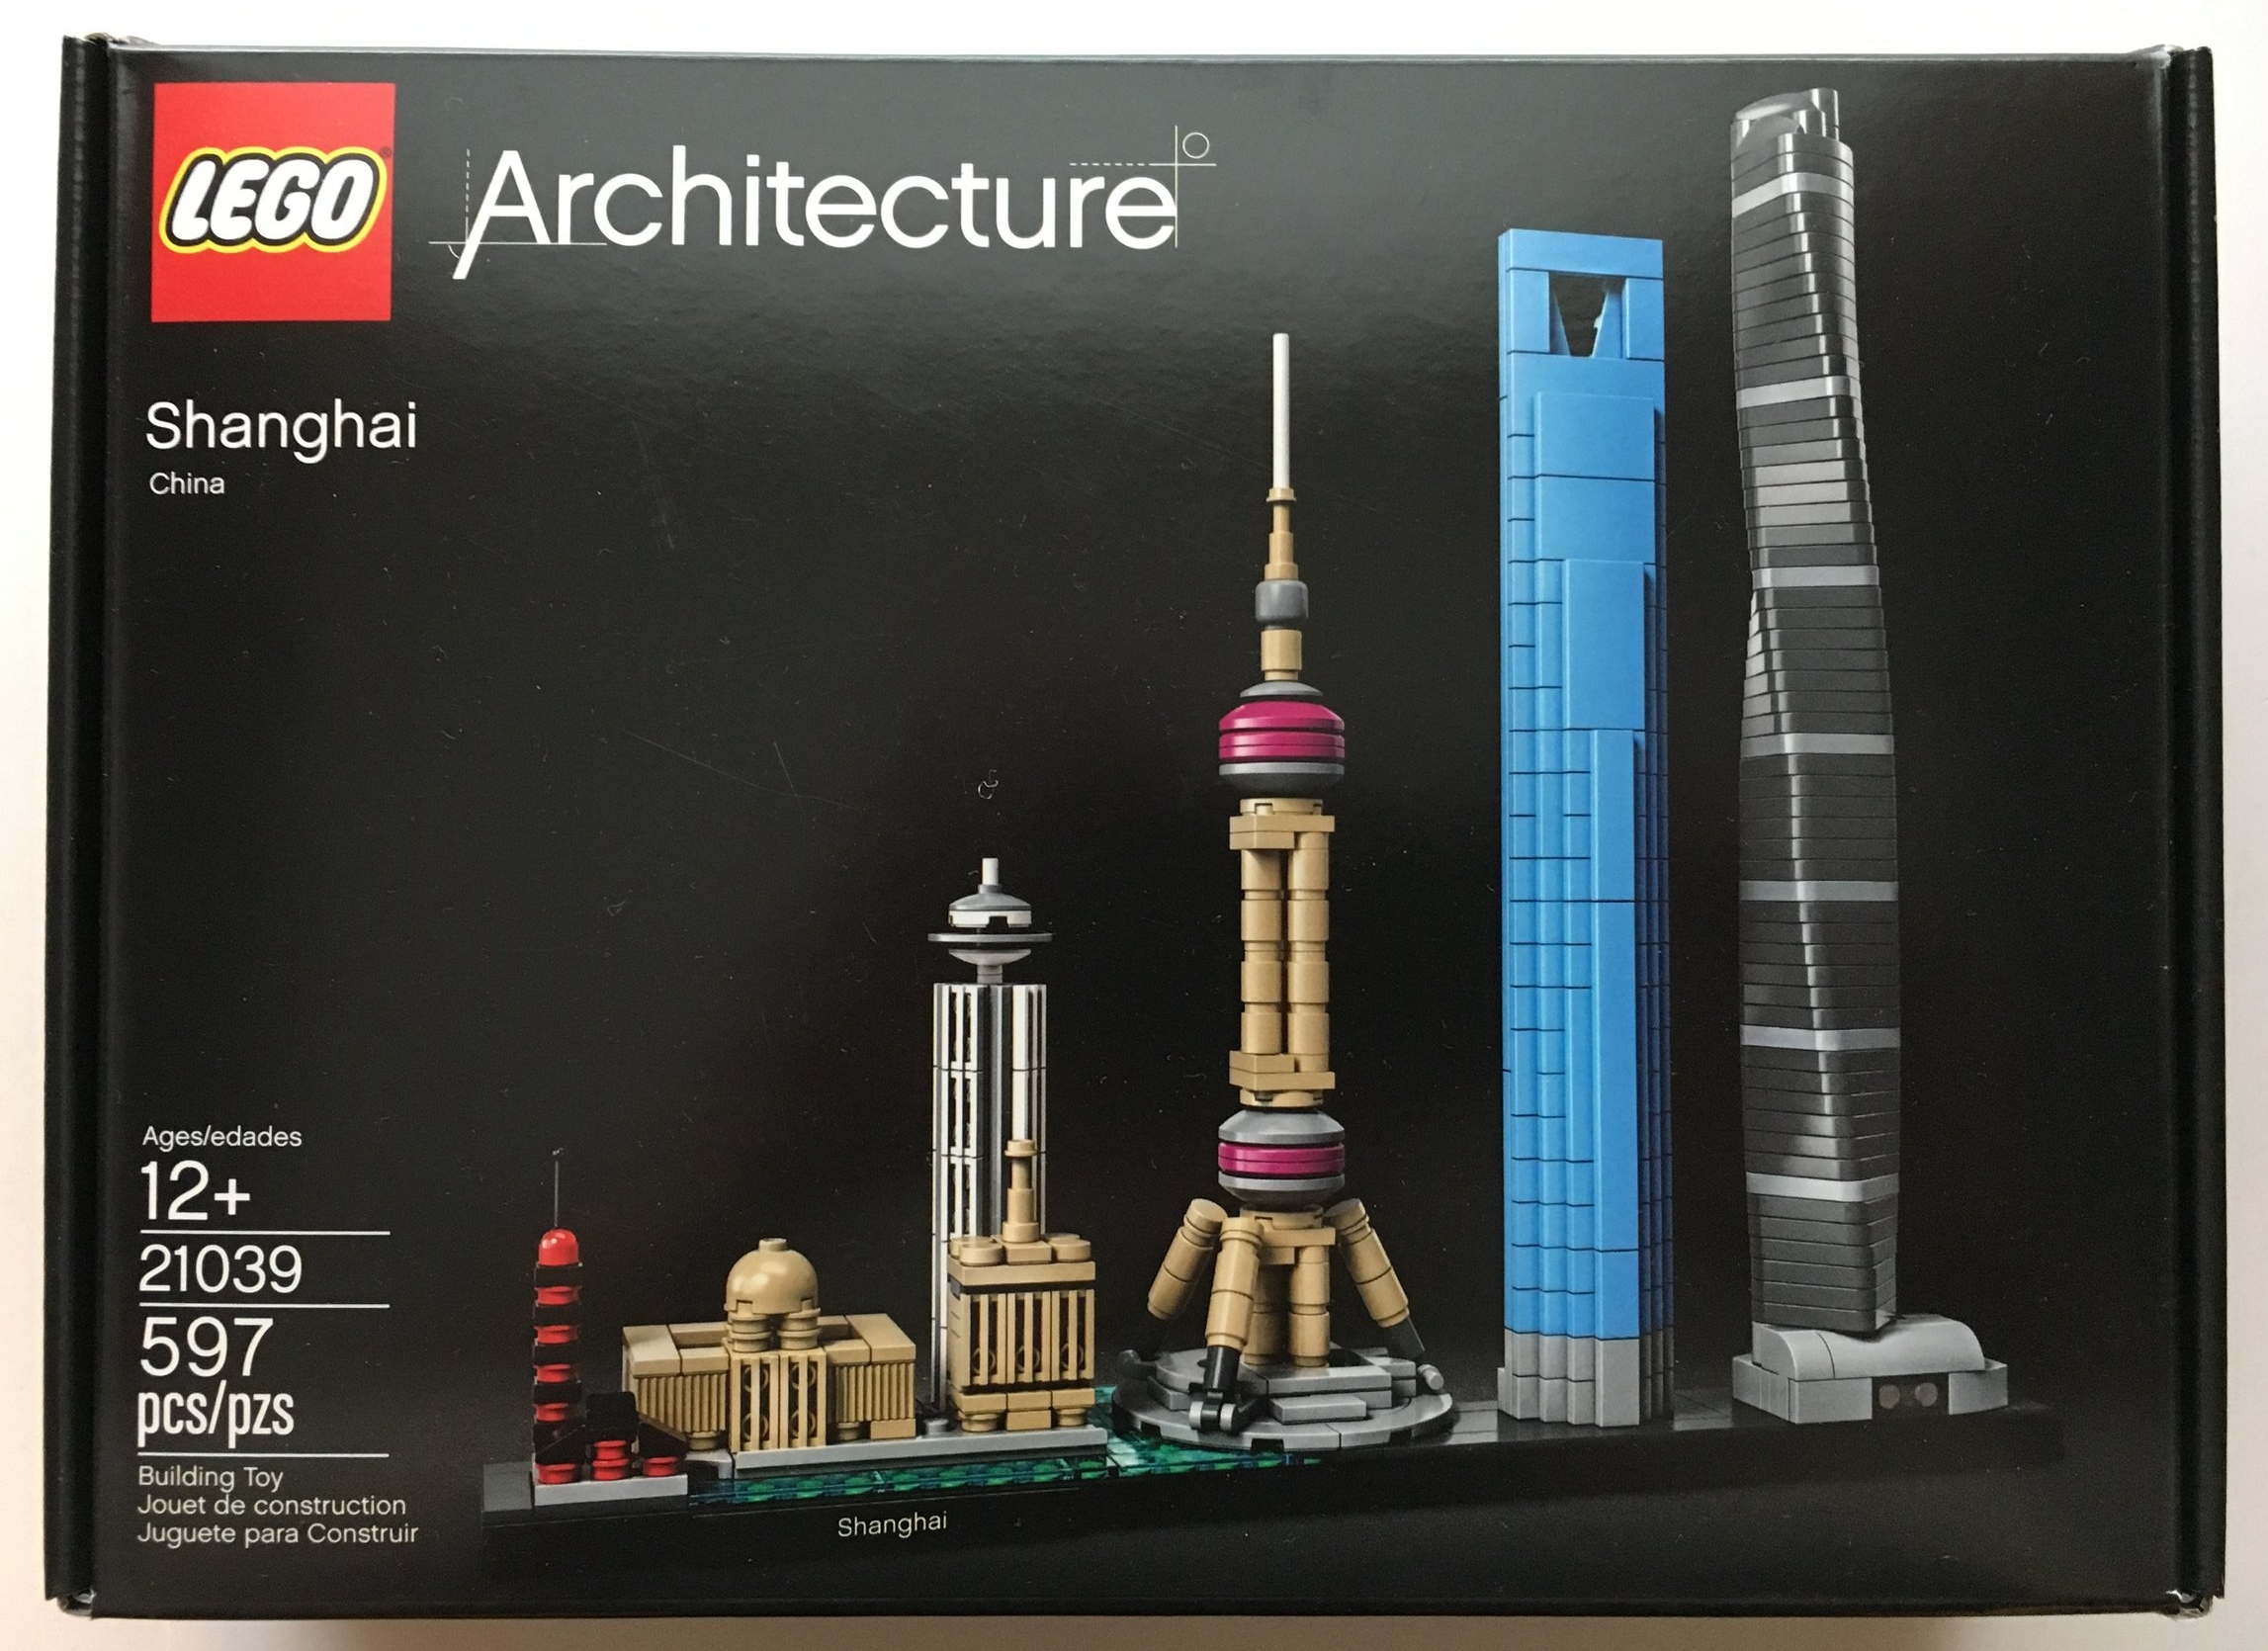 Set Review - #21039 - Shanghai, China - LEGO Architecture Bricks Bricks